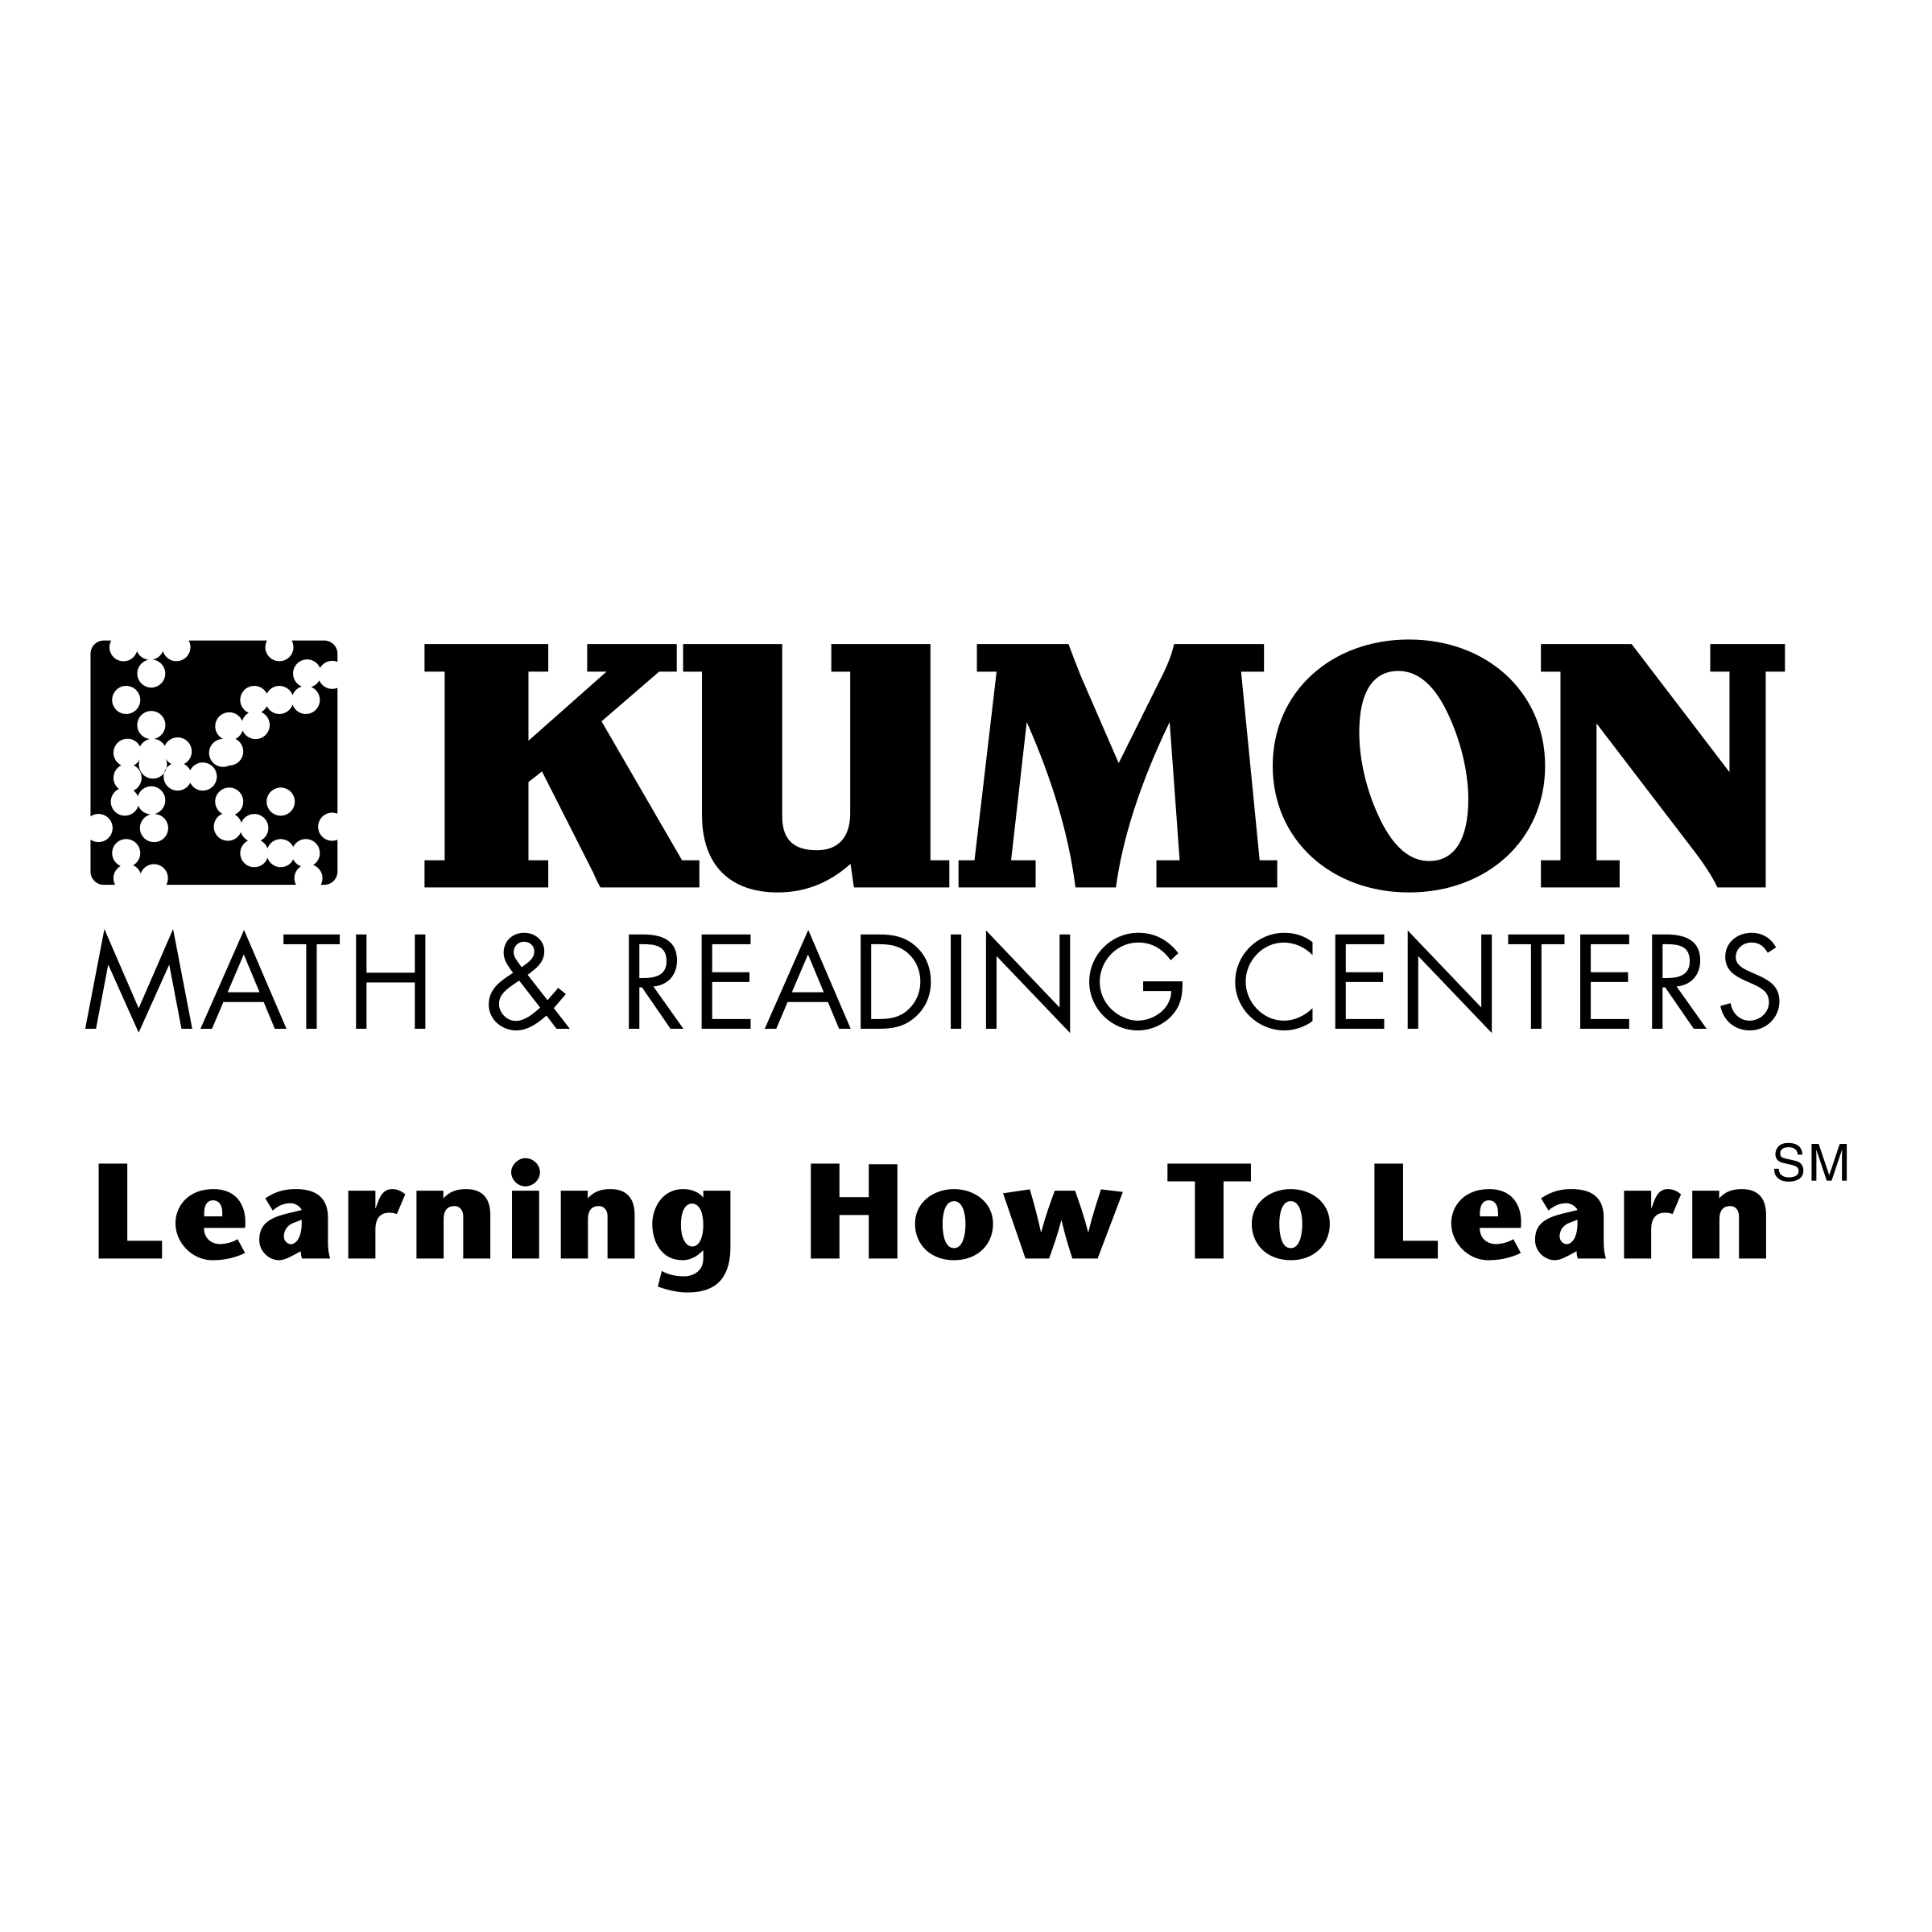 Kumon Logo - Kumon Logo PNG Transparent & SVG Vector - Freebie Supply